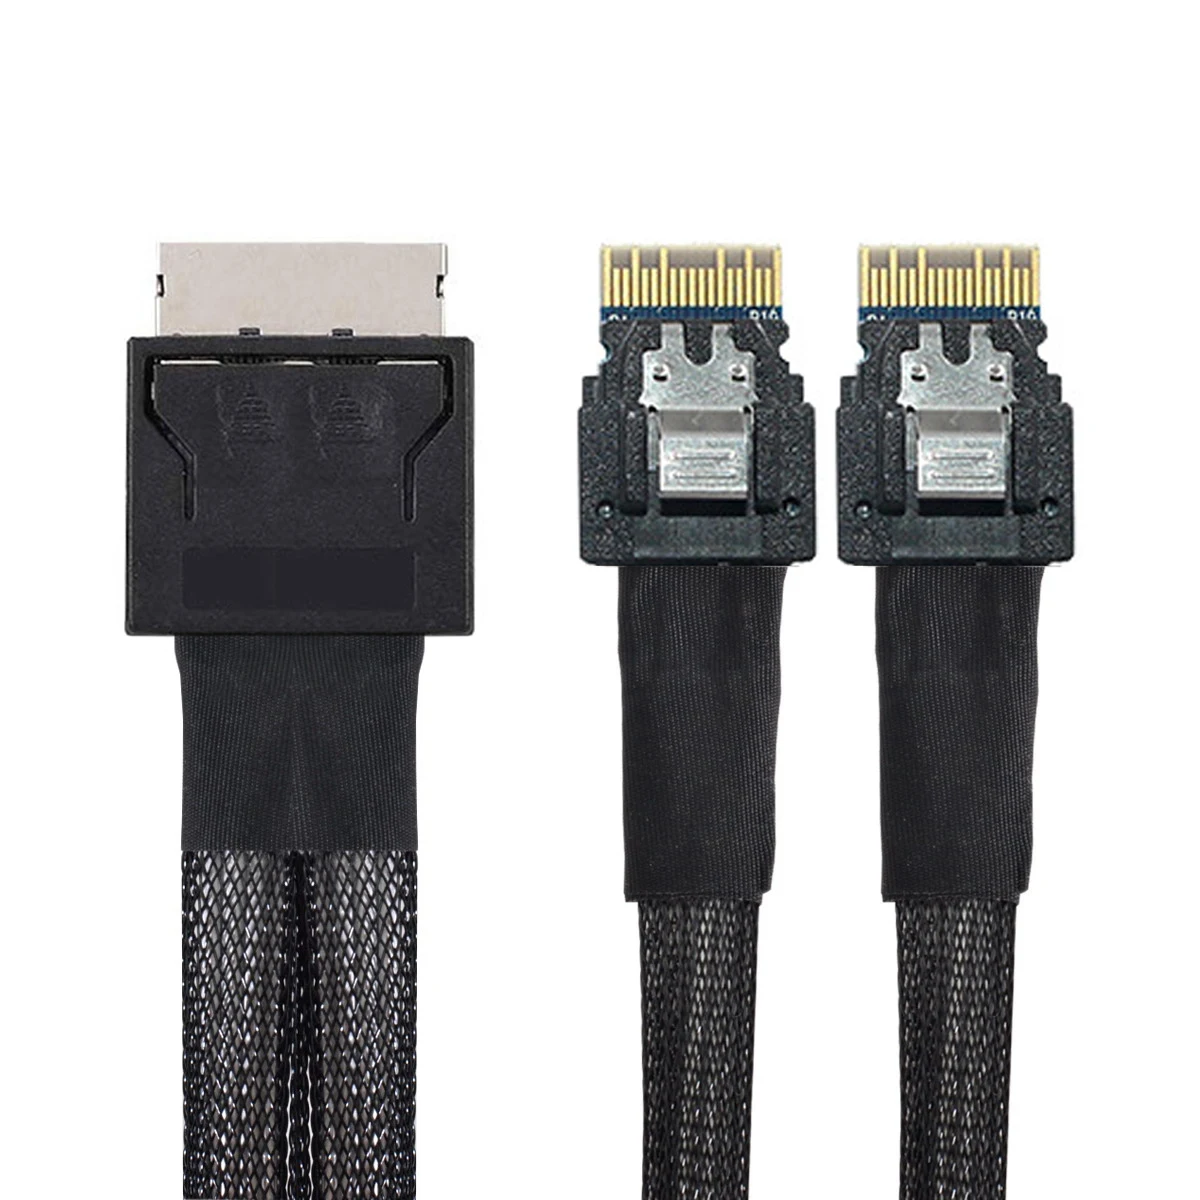 

Cablecc OCuLink PCIe PCI-Express SFF-8611 8x 8-Lane to Dual SFF-8654 Slimline 4x SSD кабель для передачи данных 50 см